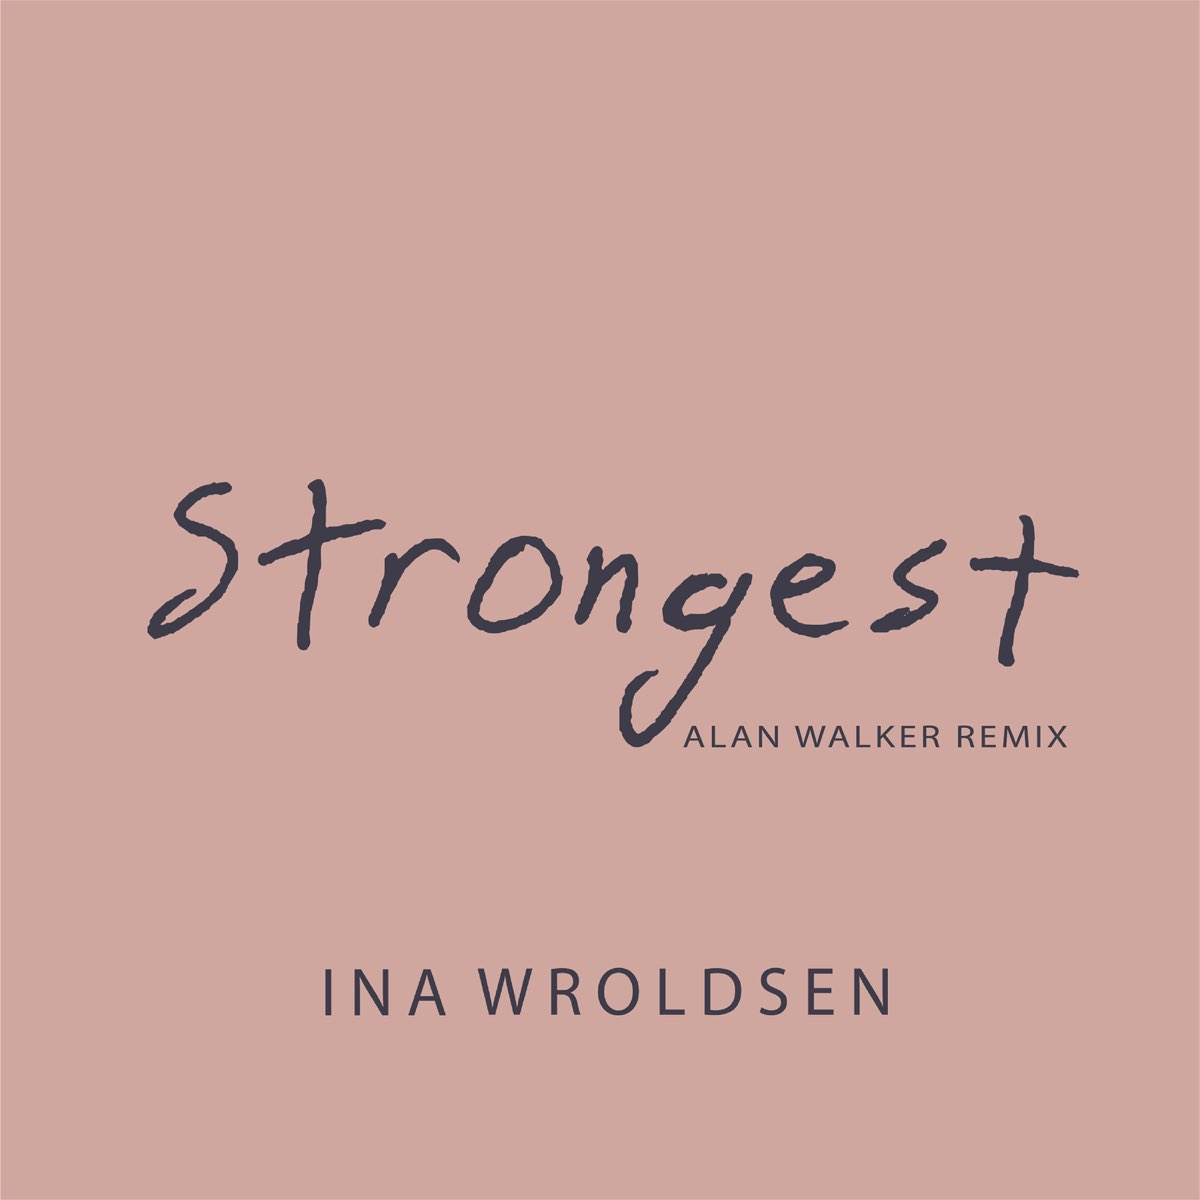 Alan Walker ft Ina Wroldsen The Strongest Music Video 